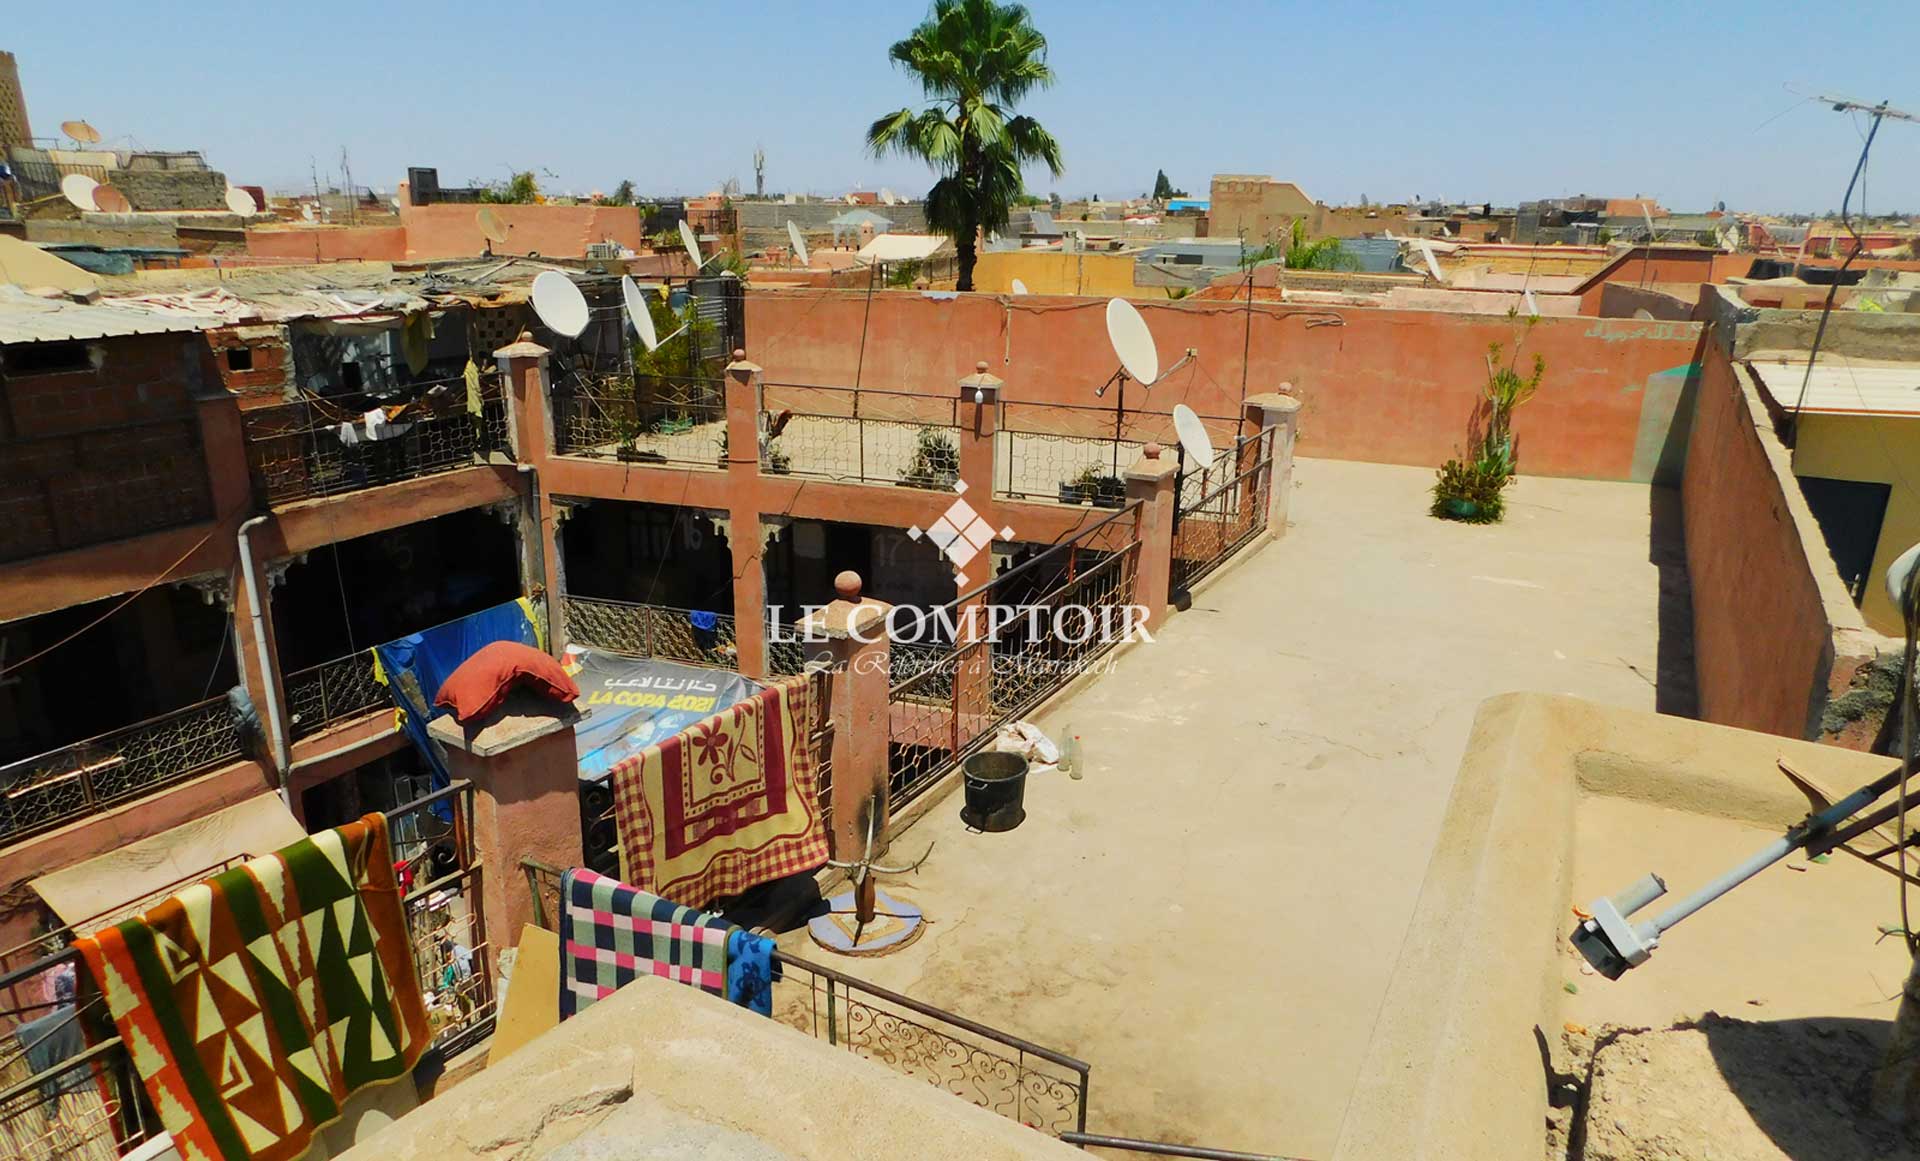 Le Comptoir Immobilier Agence Immobiliere Marrakech Riad A Renover Ben Saleh Marrakech Terrasse Patio Vente 10